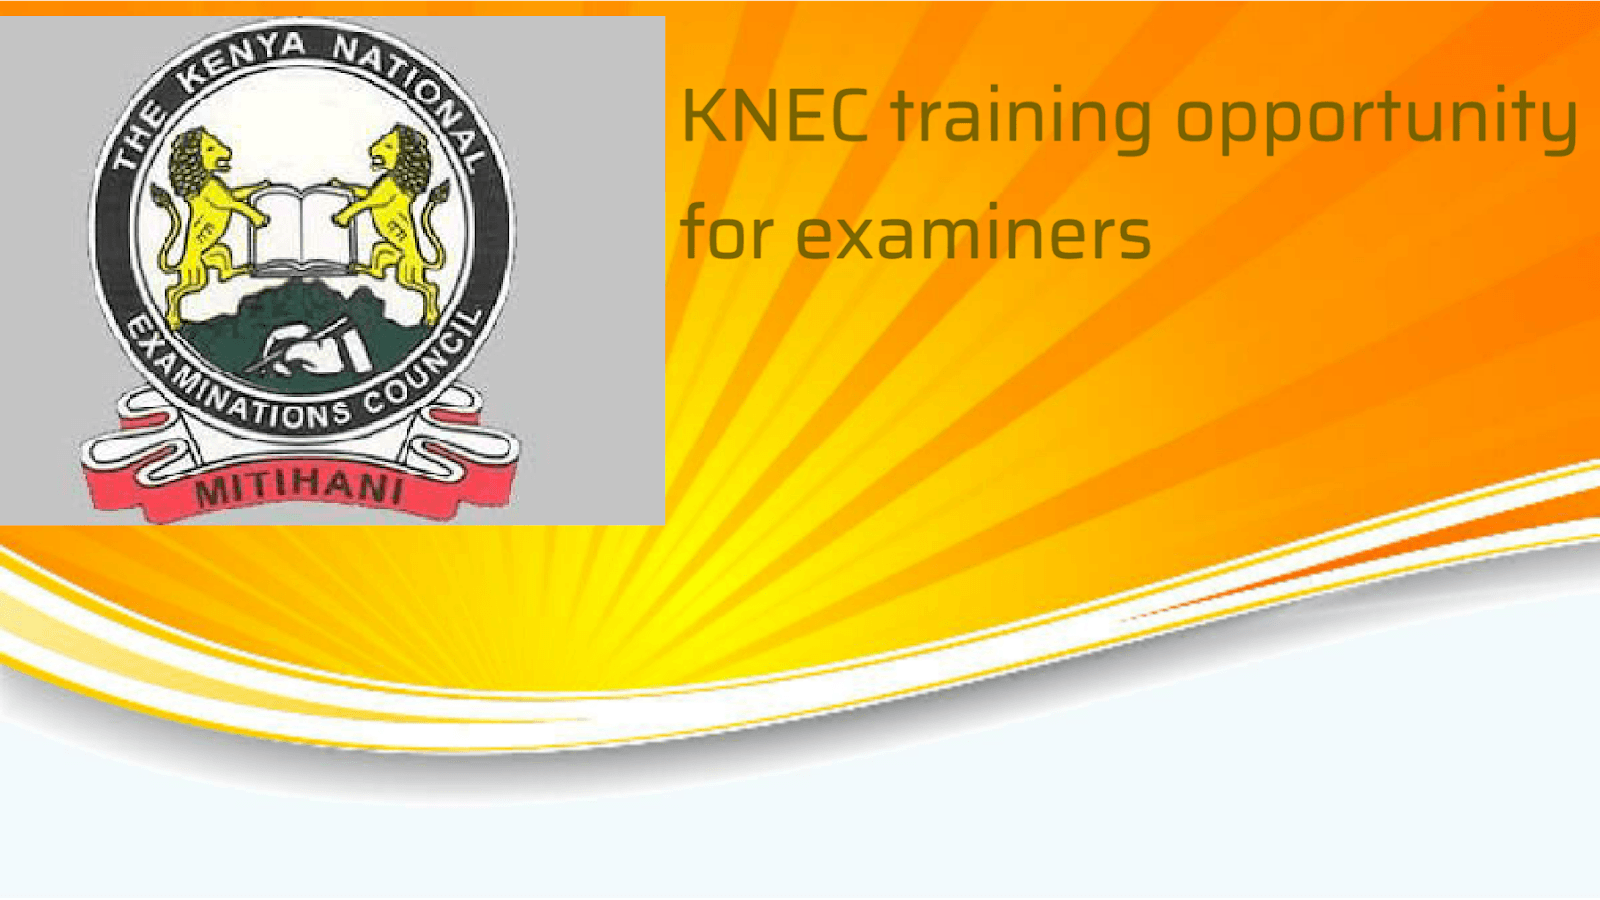 Knec Logo - KNEC Examiners Training Opportunity 2019